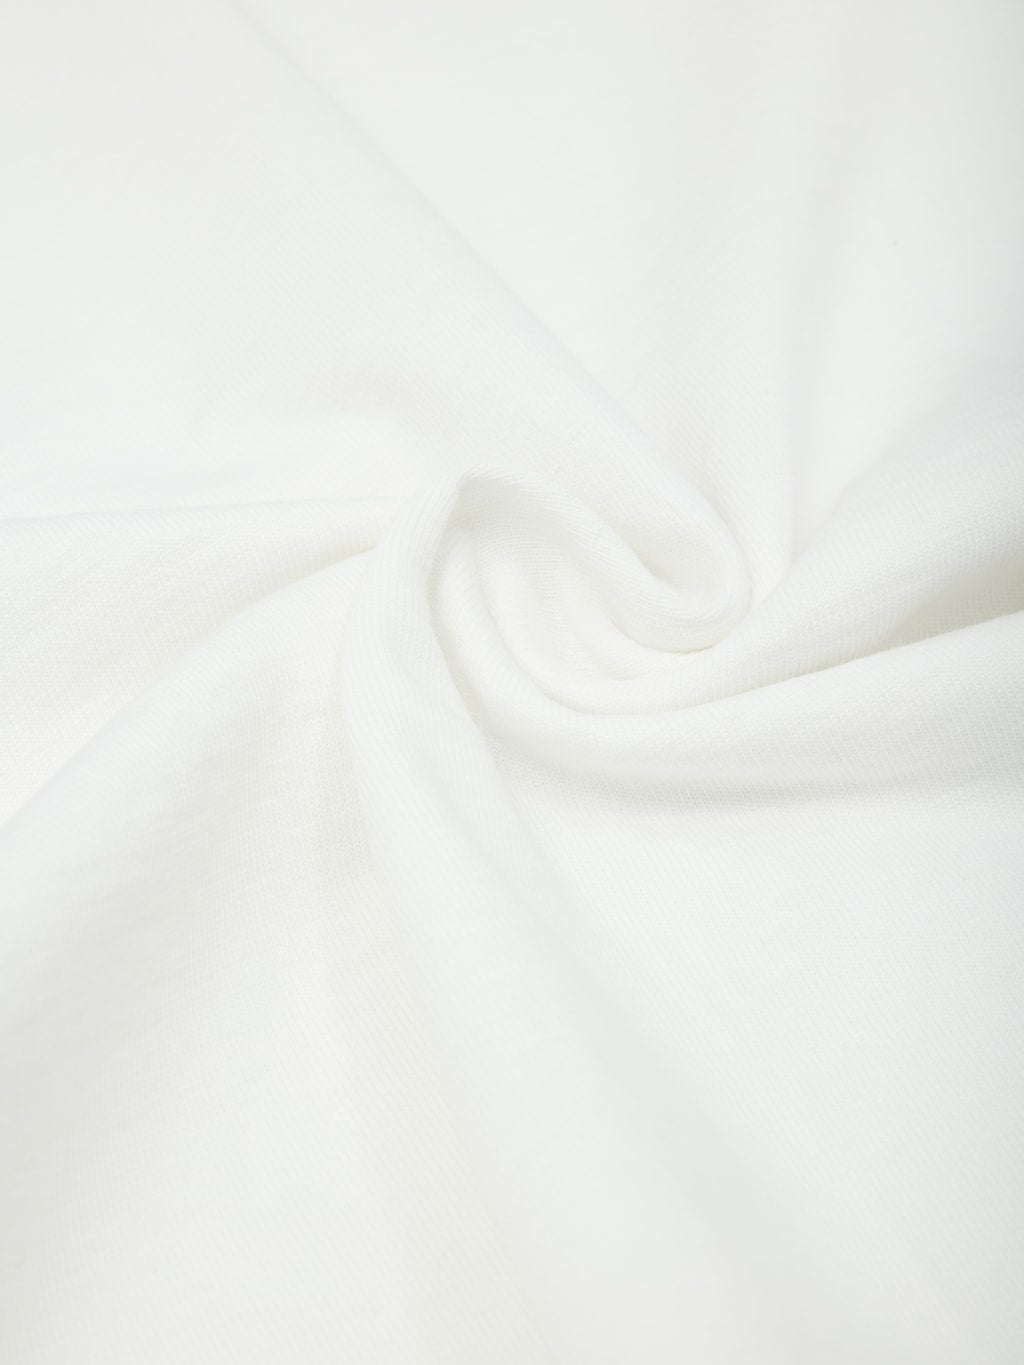 merz b schwanen 2S14 loopwheeled Tshirt heavy white  100 cotton fabric